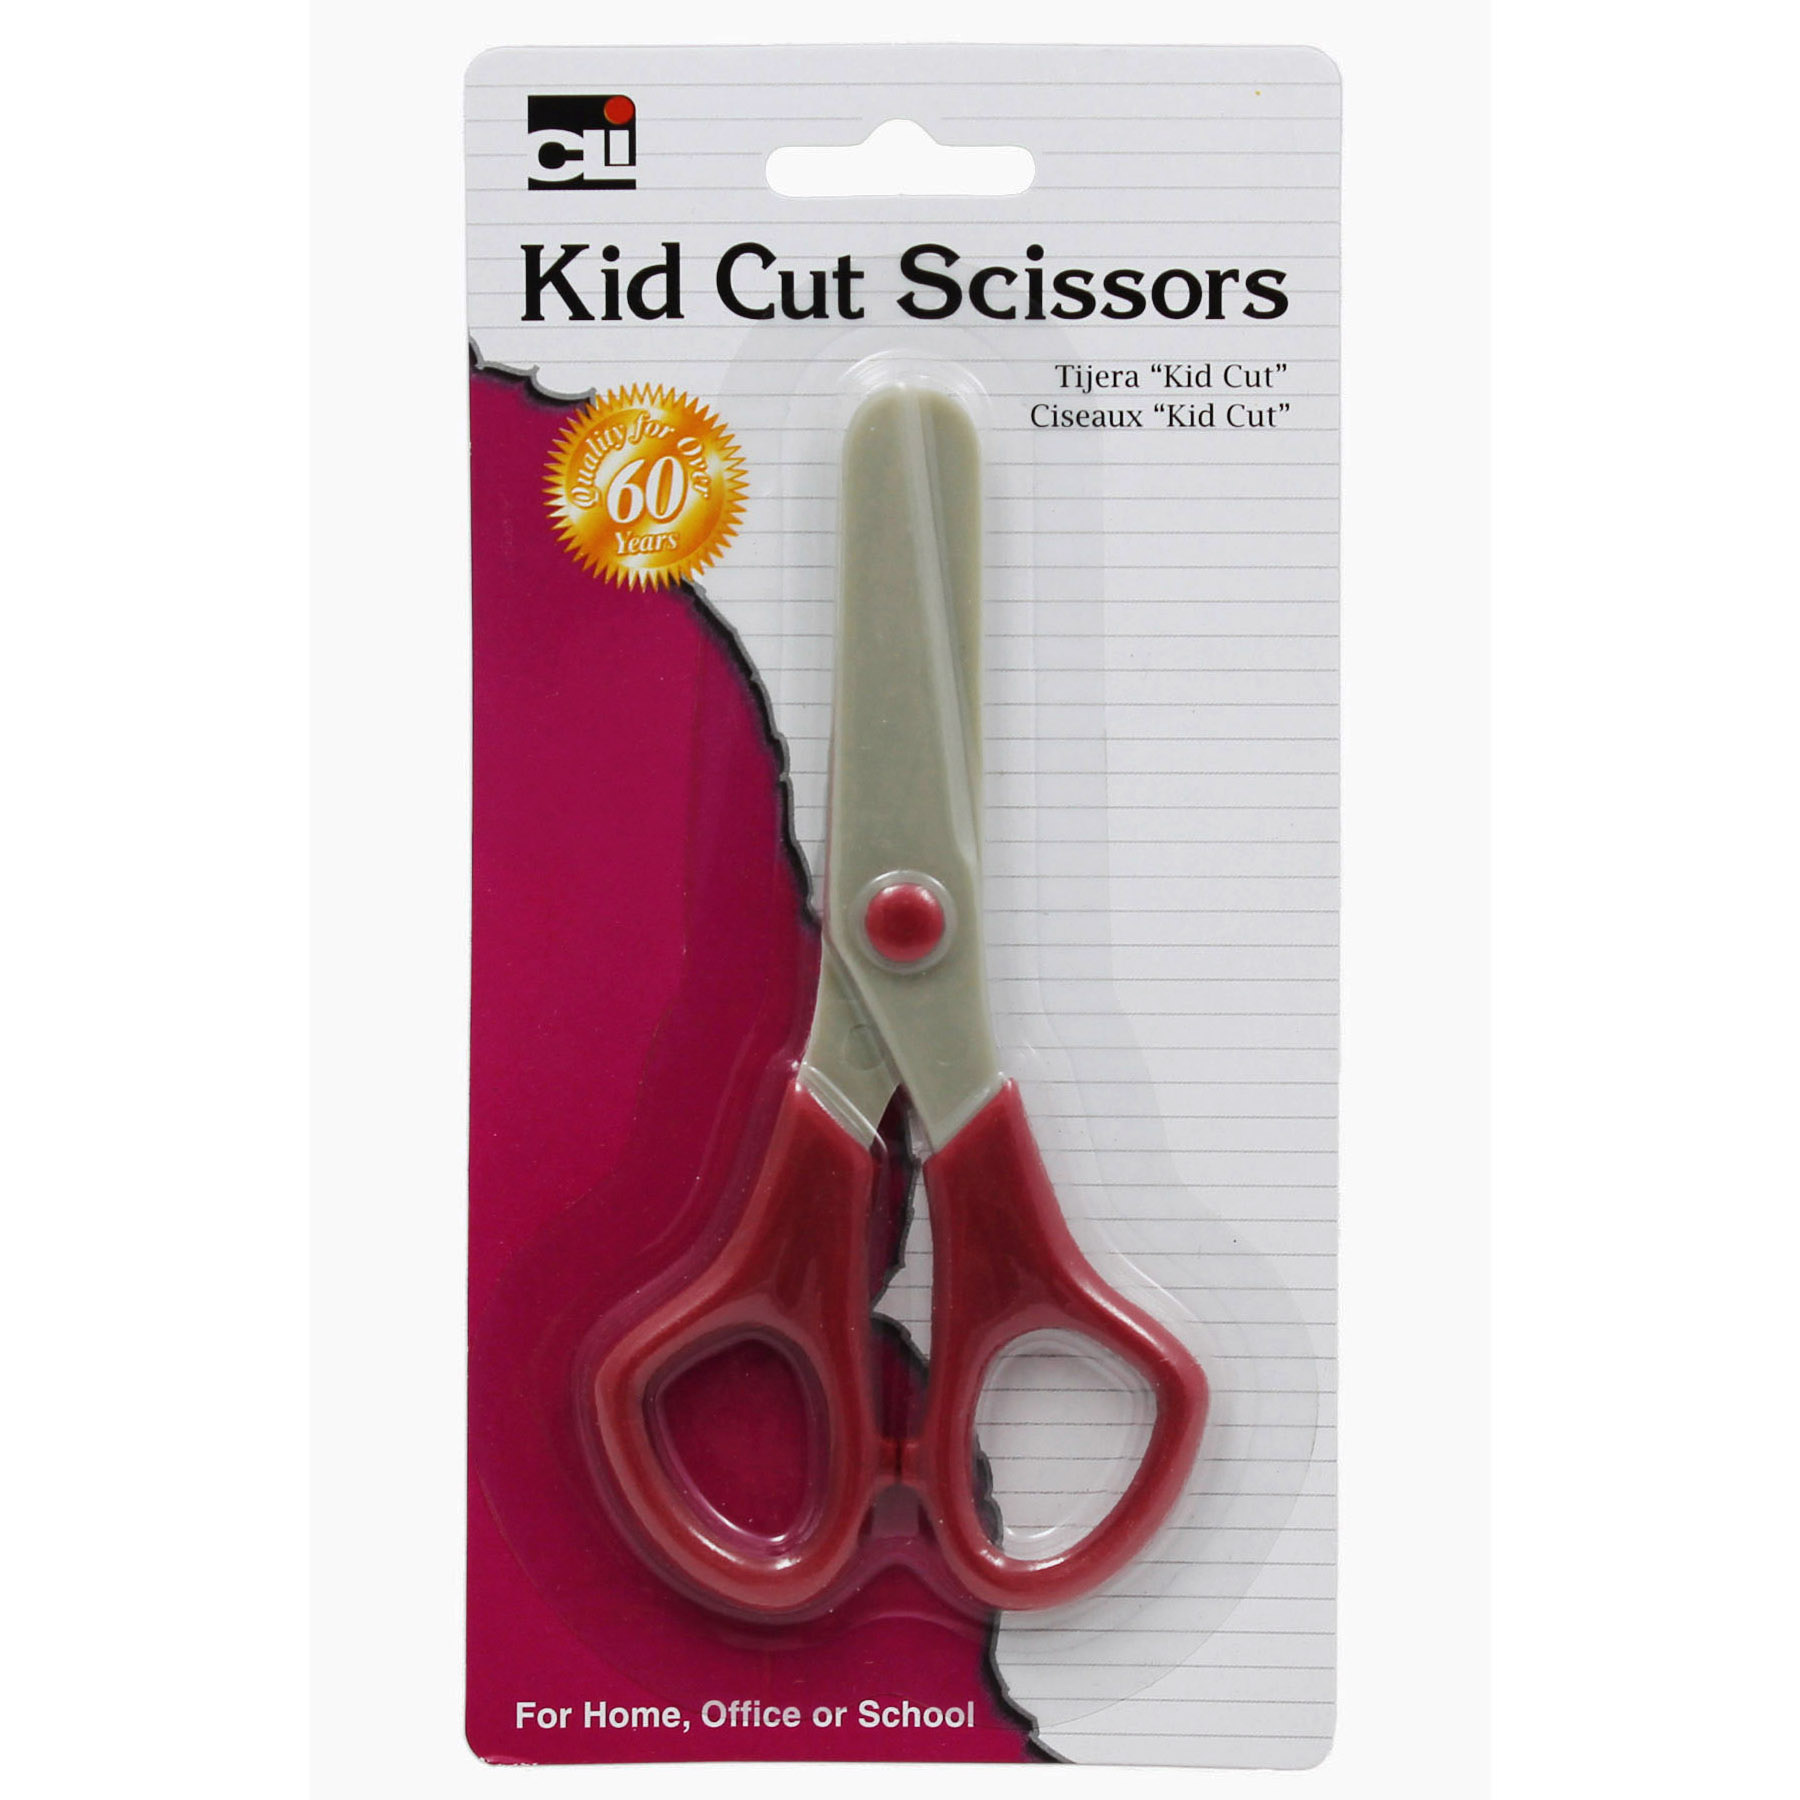 Kid Cut Scissors, Blunt Tip, Plastic, Assorted Colors